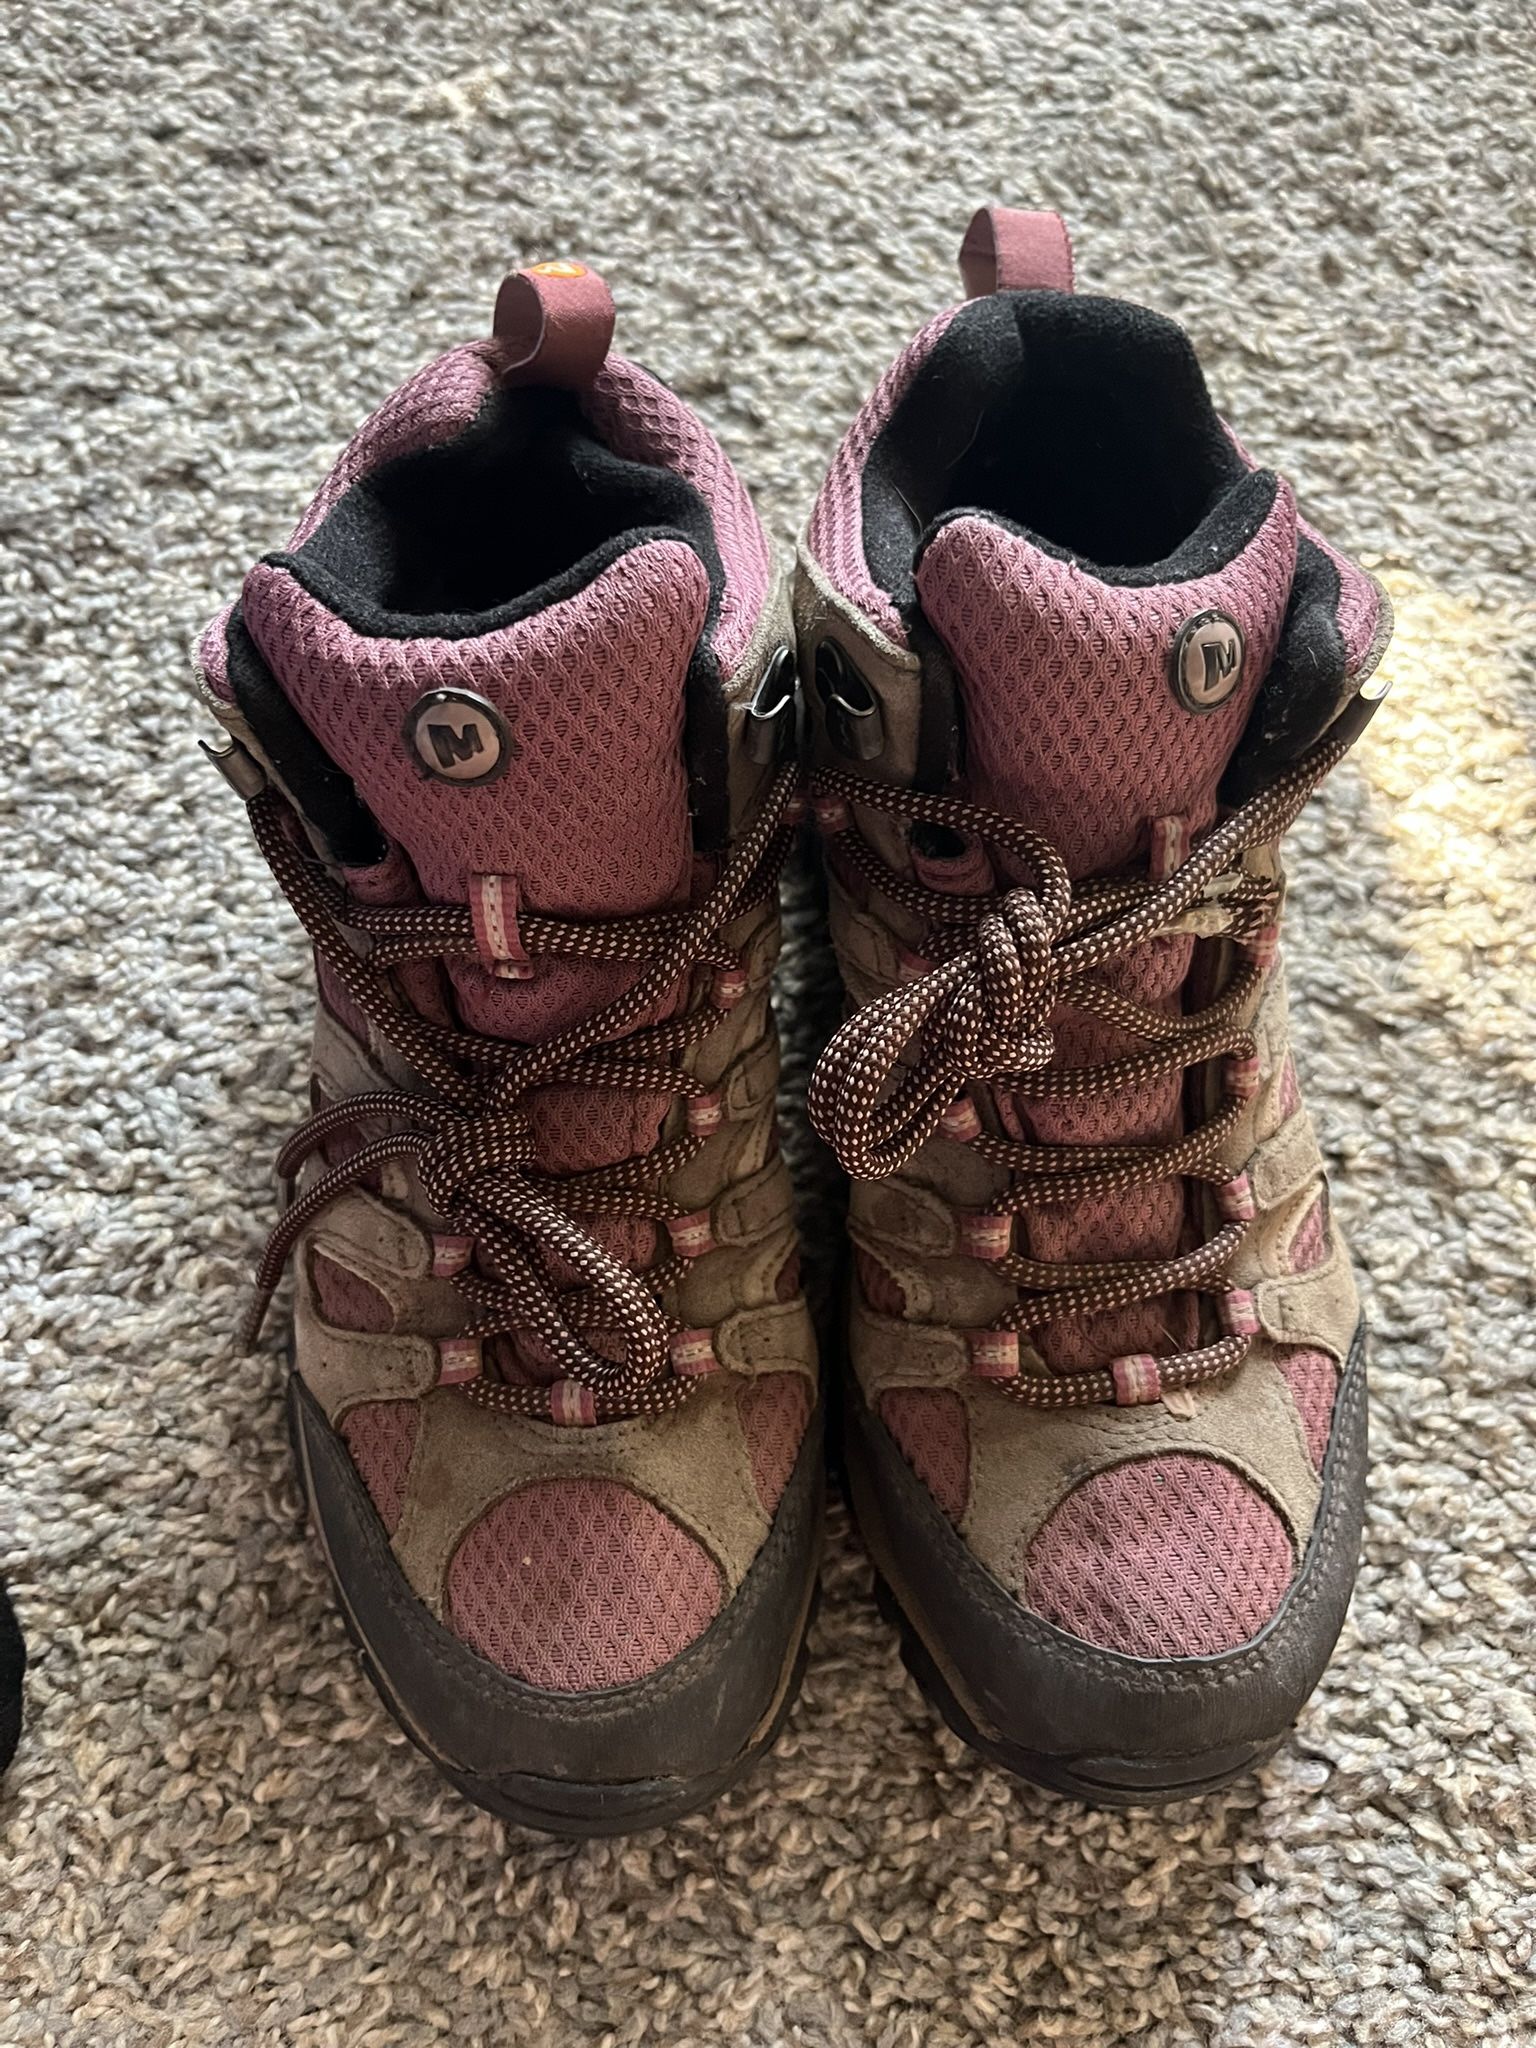 Merrell Hiking Boots 8.5